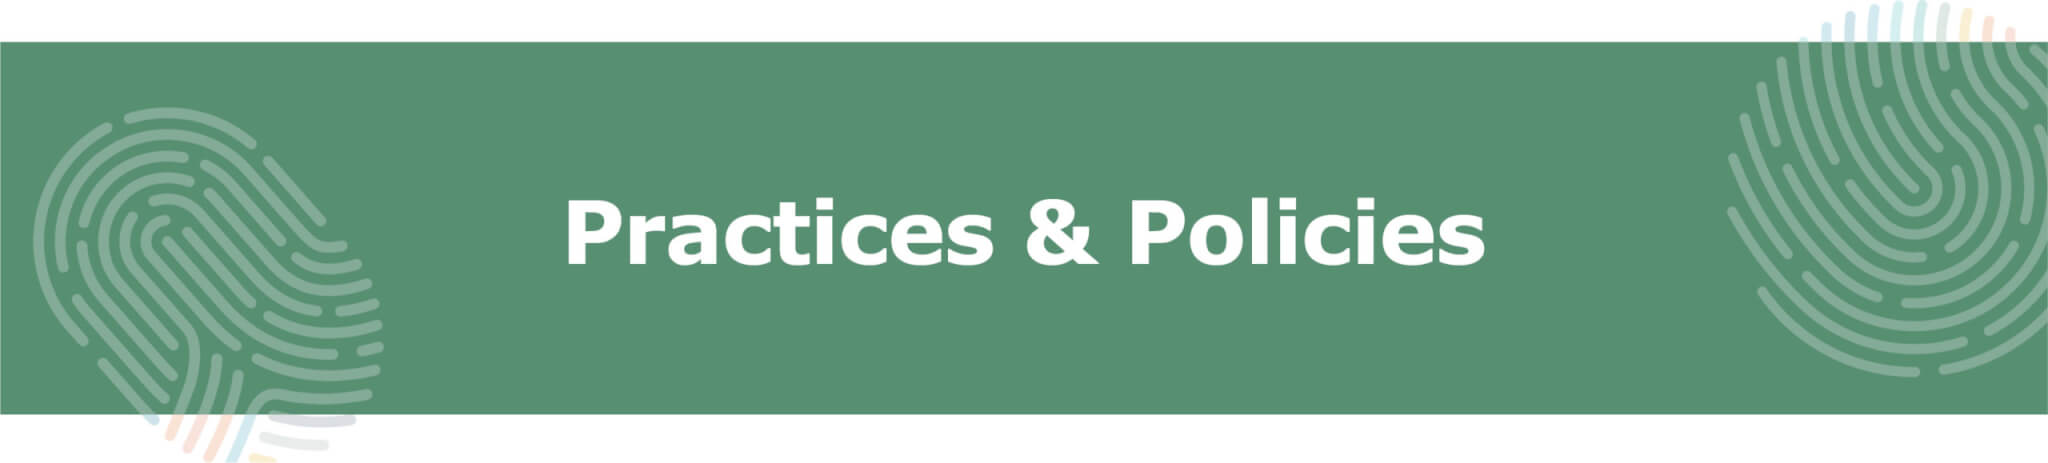 Practices & Policies Header Graphic